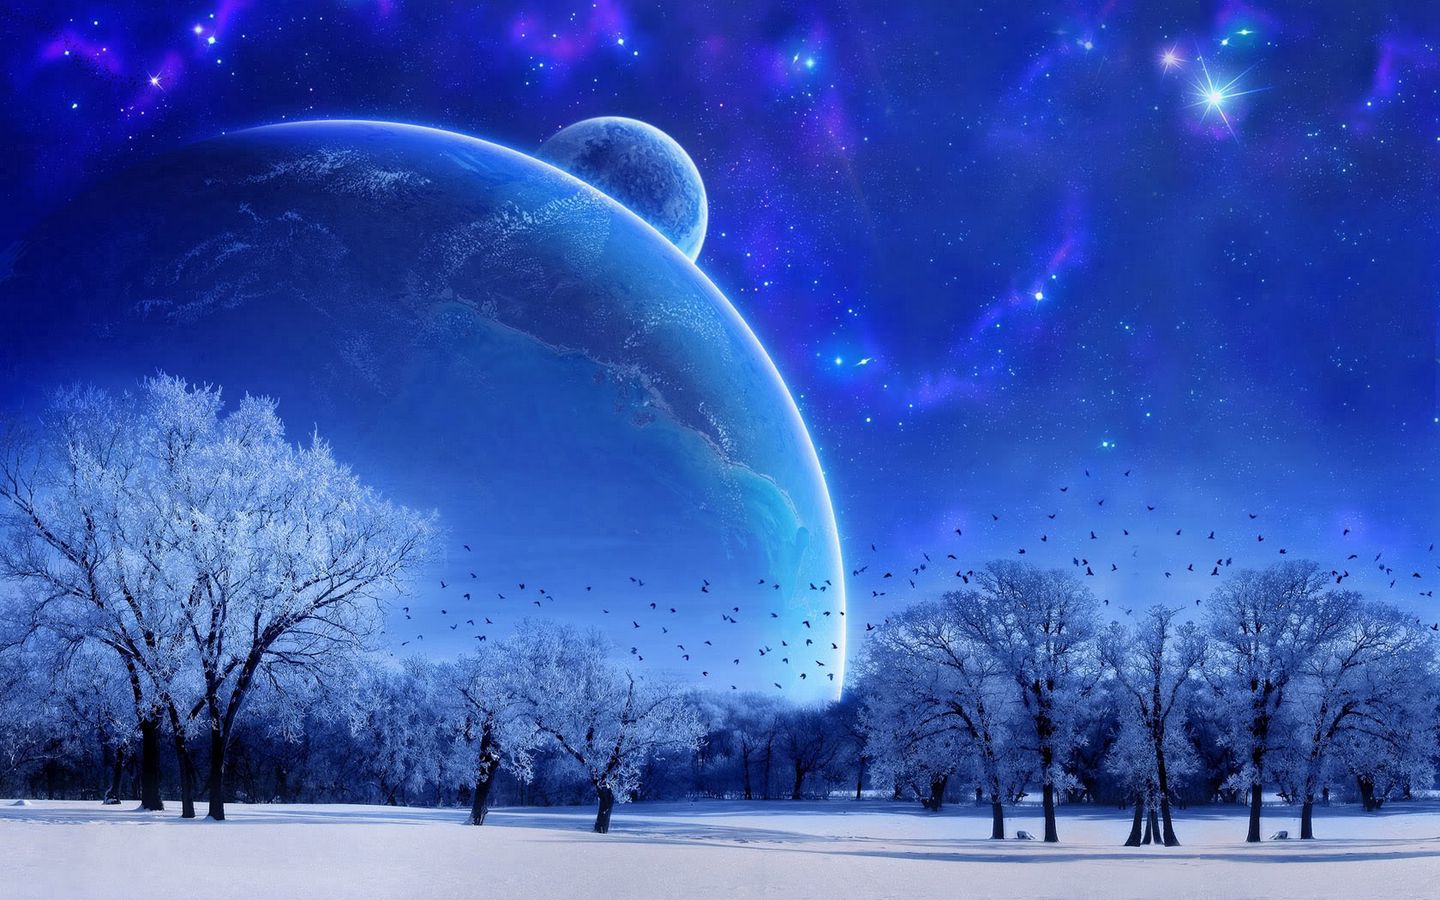 Download wallpaper 1440x900 nature, landscape, winter, sky, snow, full  moon, trees, birds, evening widescreen 16:10 hd background